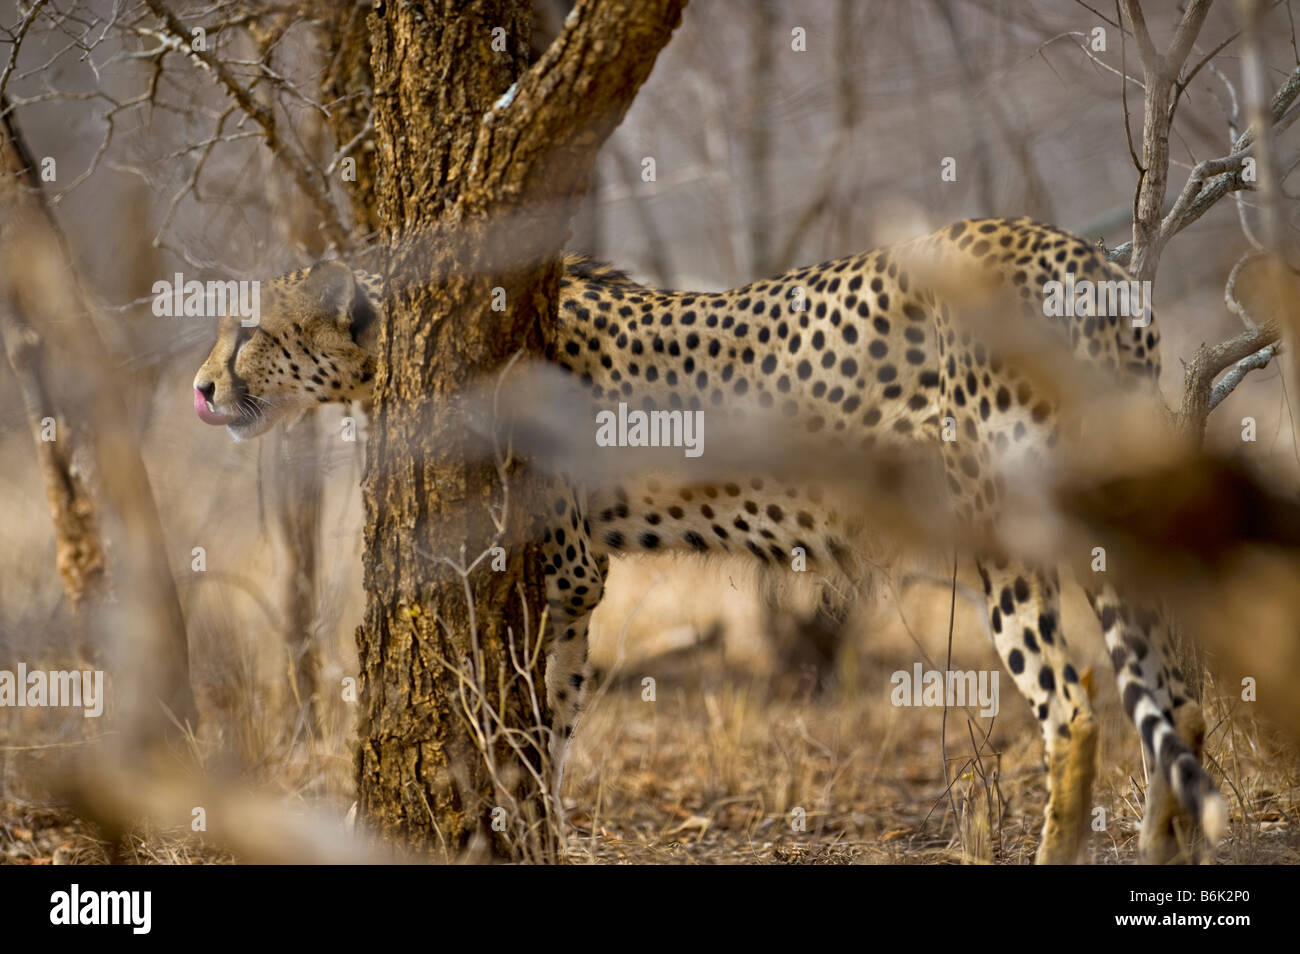 WILDLIFE wild cheetah gepard Acinonyx jubatus hunt hunting run running look looking male perfectly camouflaged camouflage bush b Stock Photo